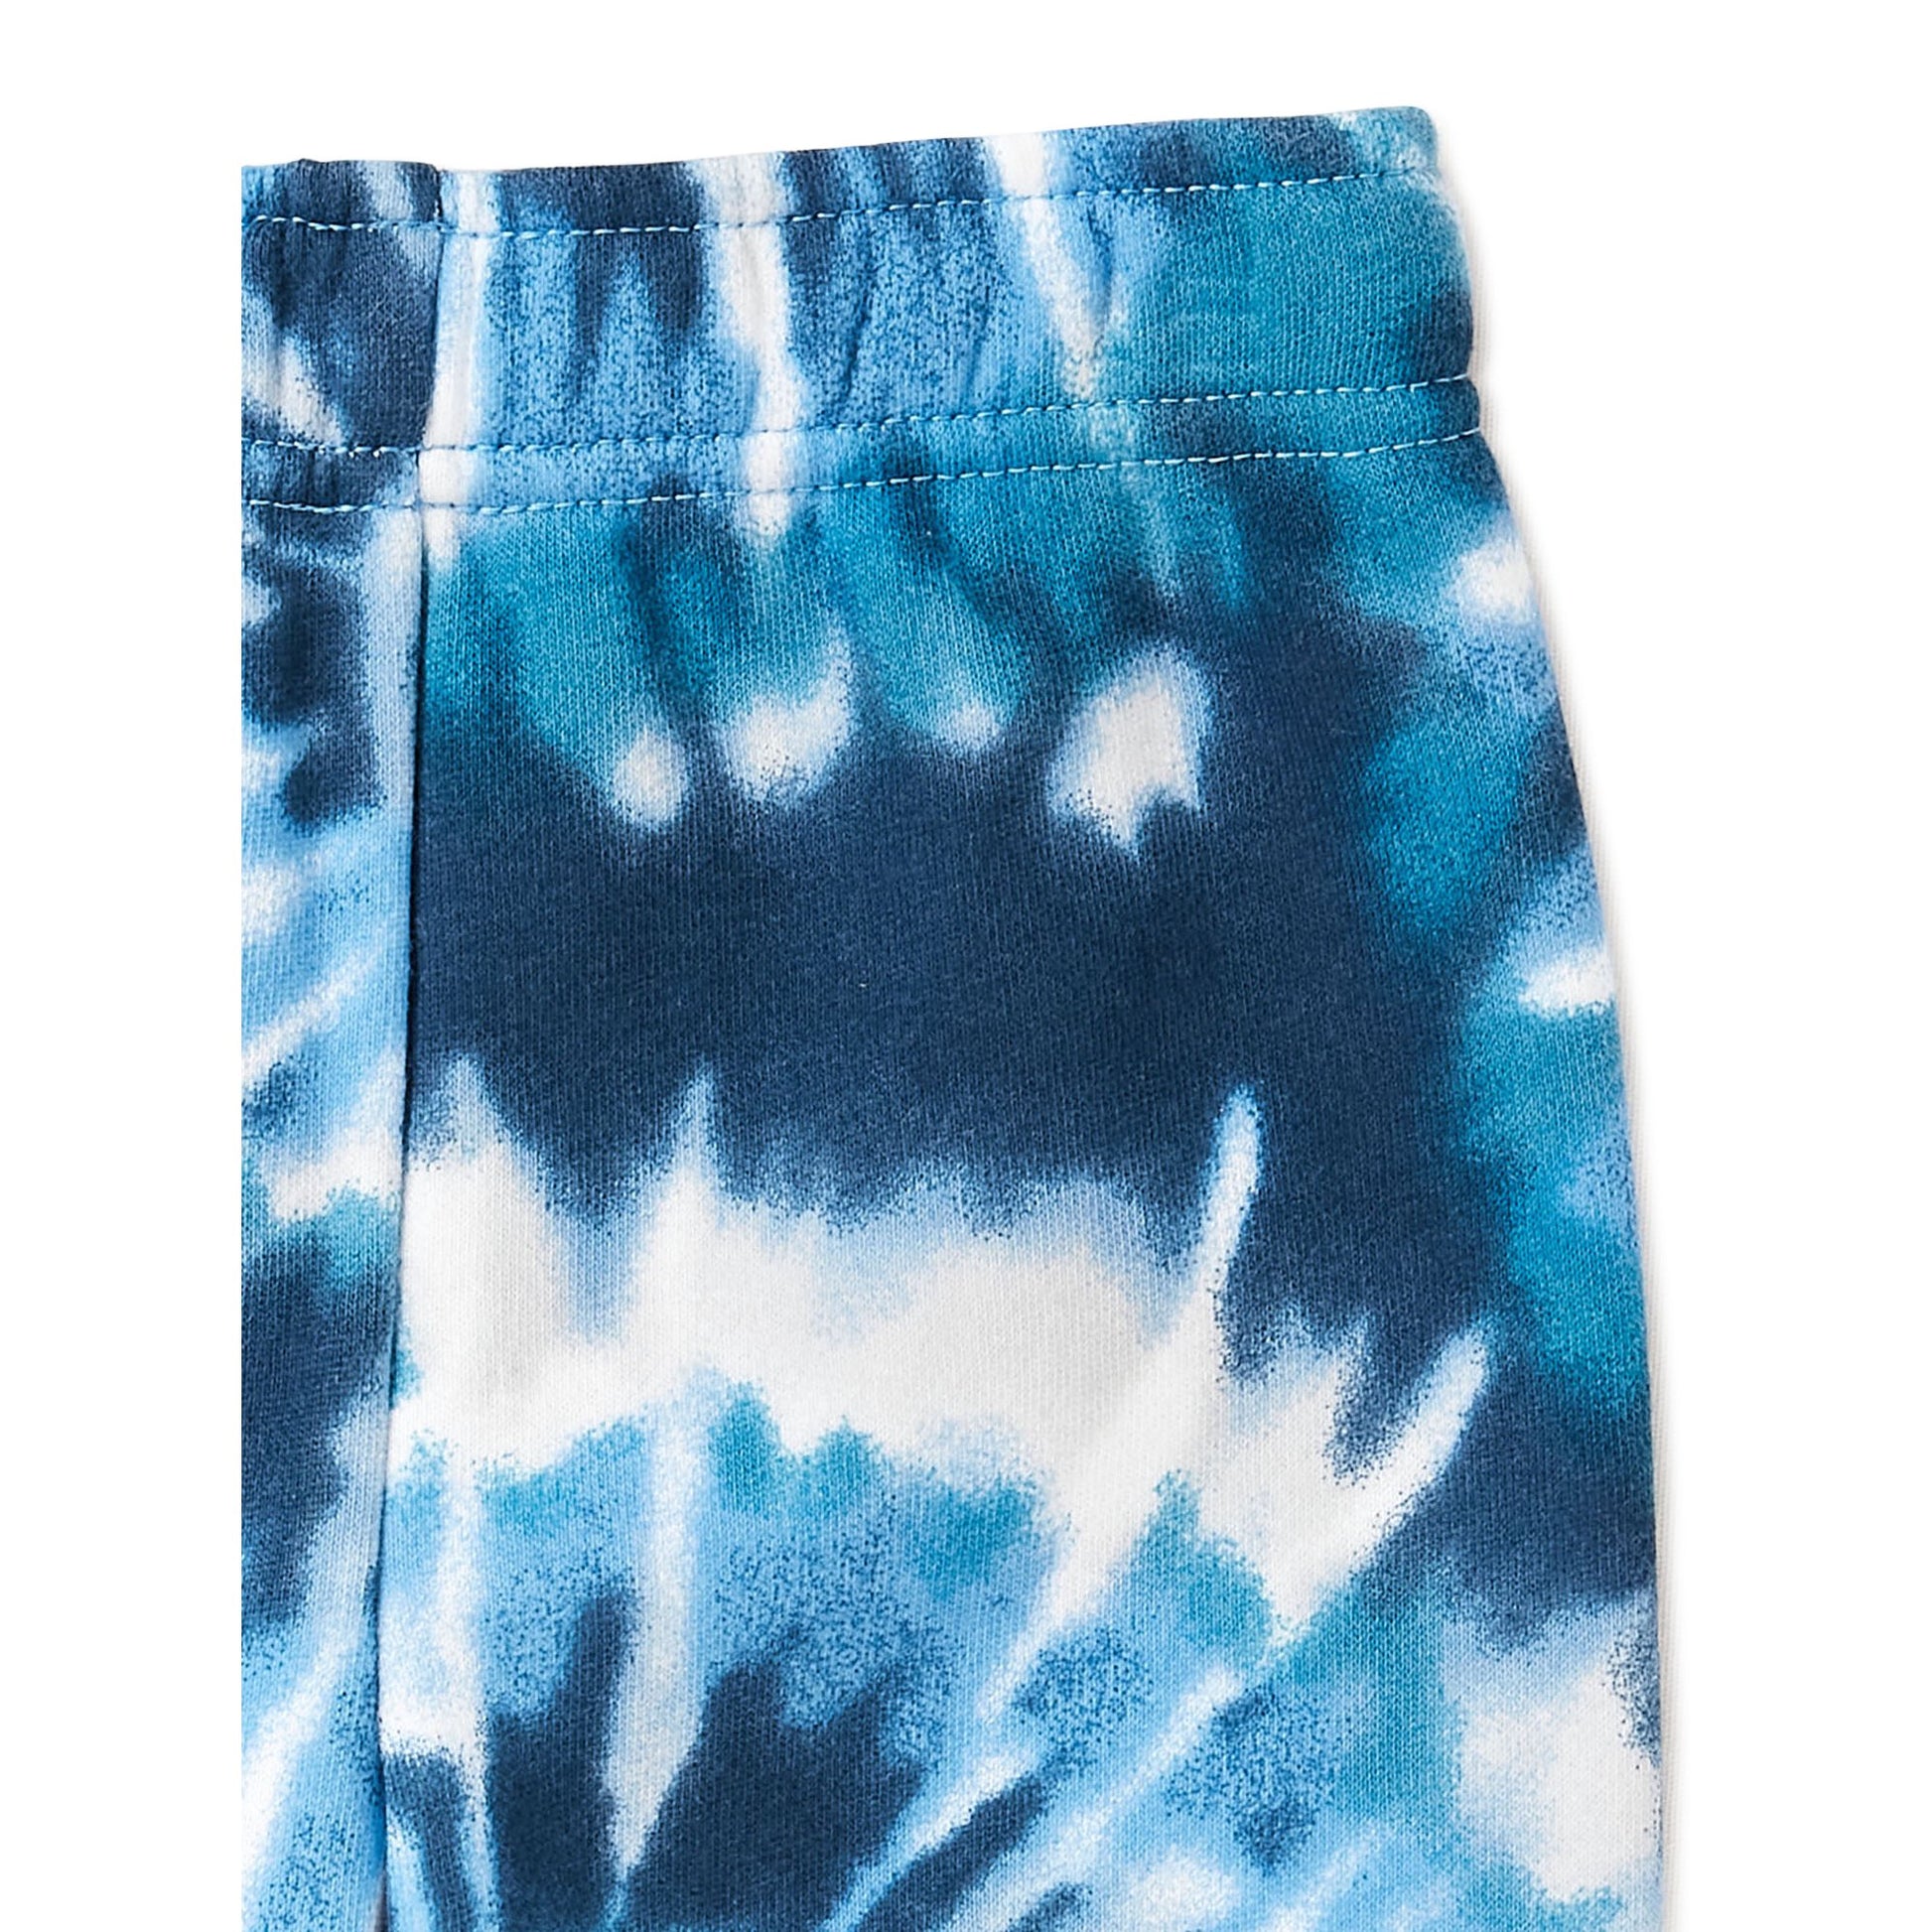 Size 24M Baby Boy Blue Tie Dye Fleece Pants | Tigbuls Variety